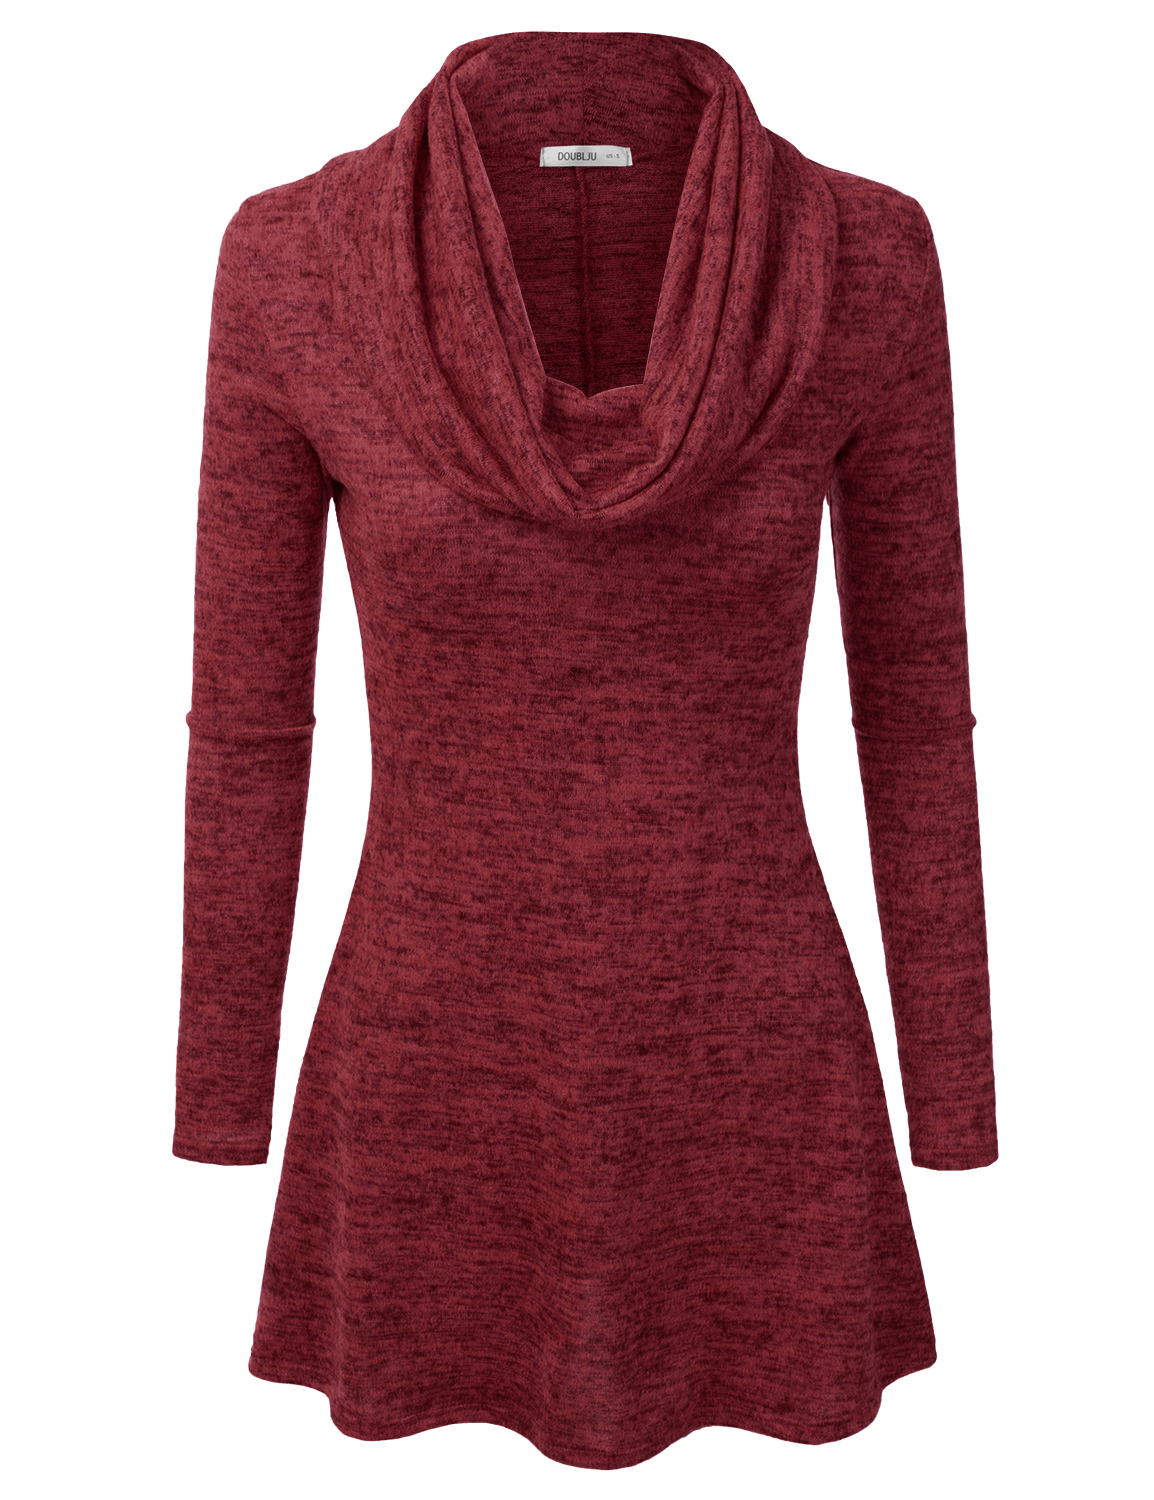 Doublju Womens Long Sleeve Cowl Neck A-Line Tunic Sweater Dress RED, 1X ...